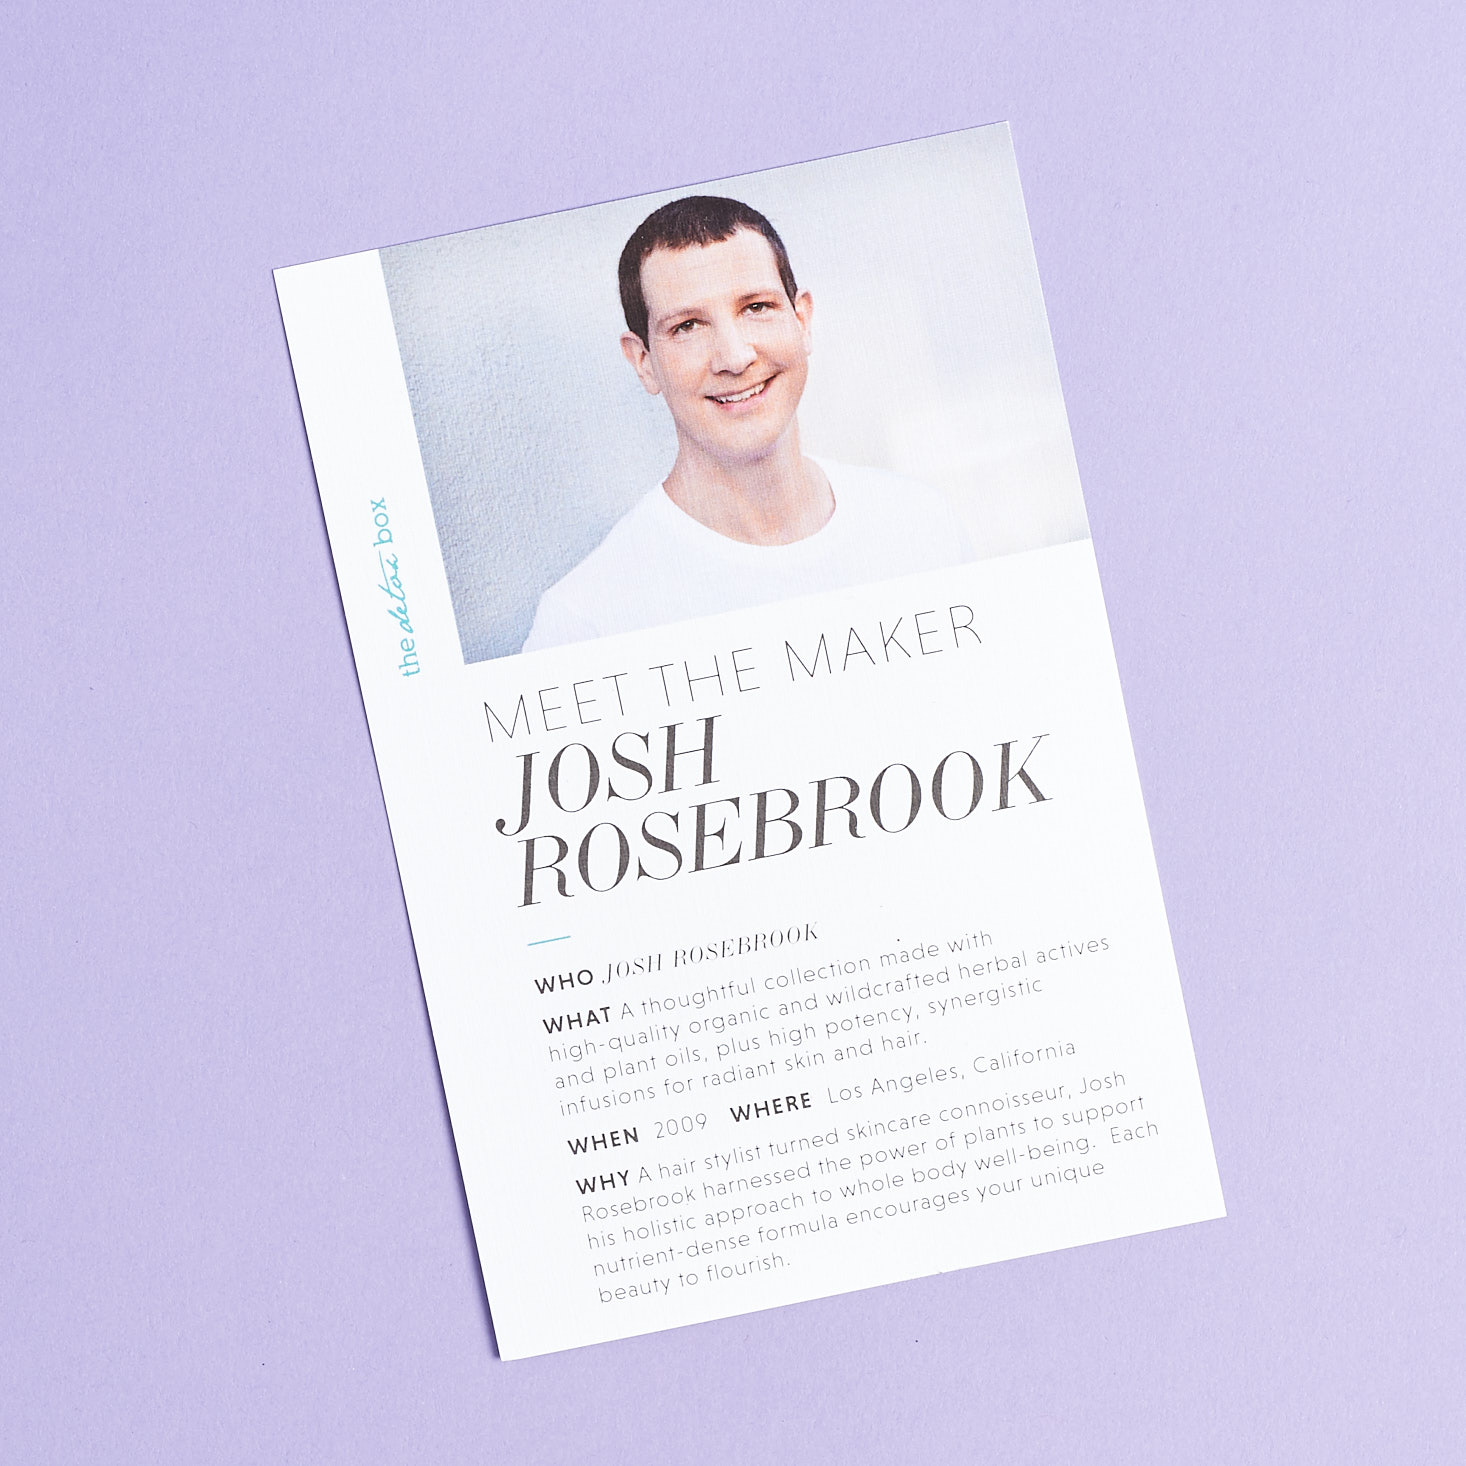 Josh Rosebrook "Meet the Maker" card with image of Josh